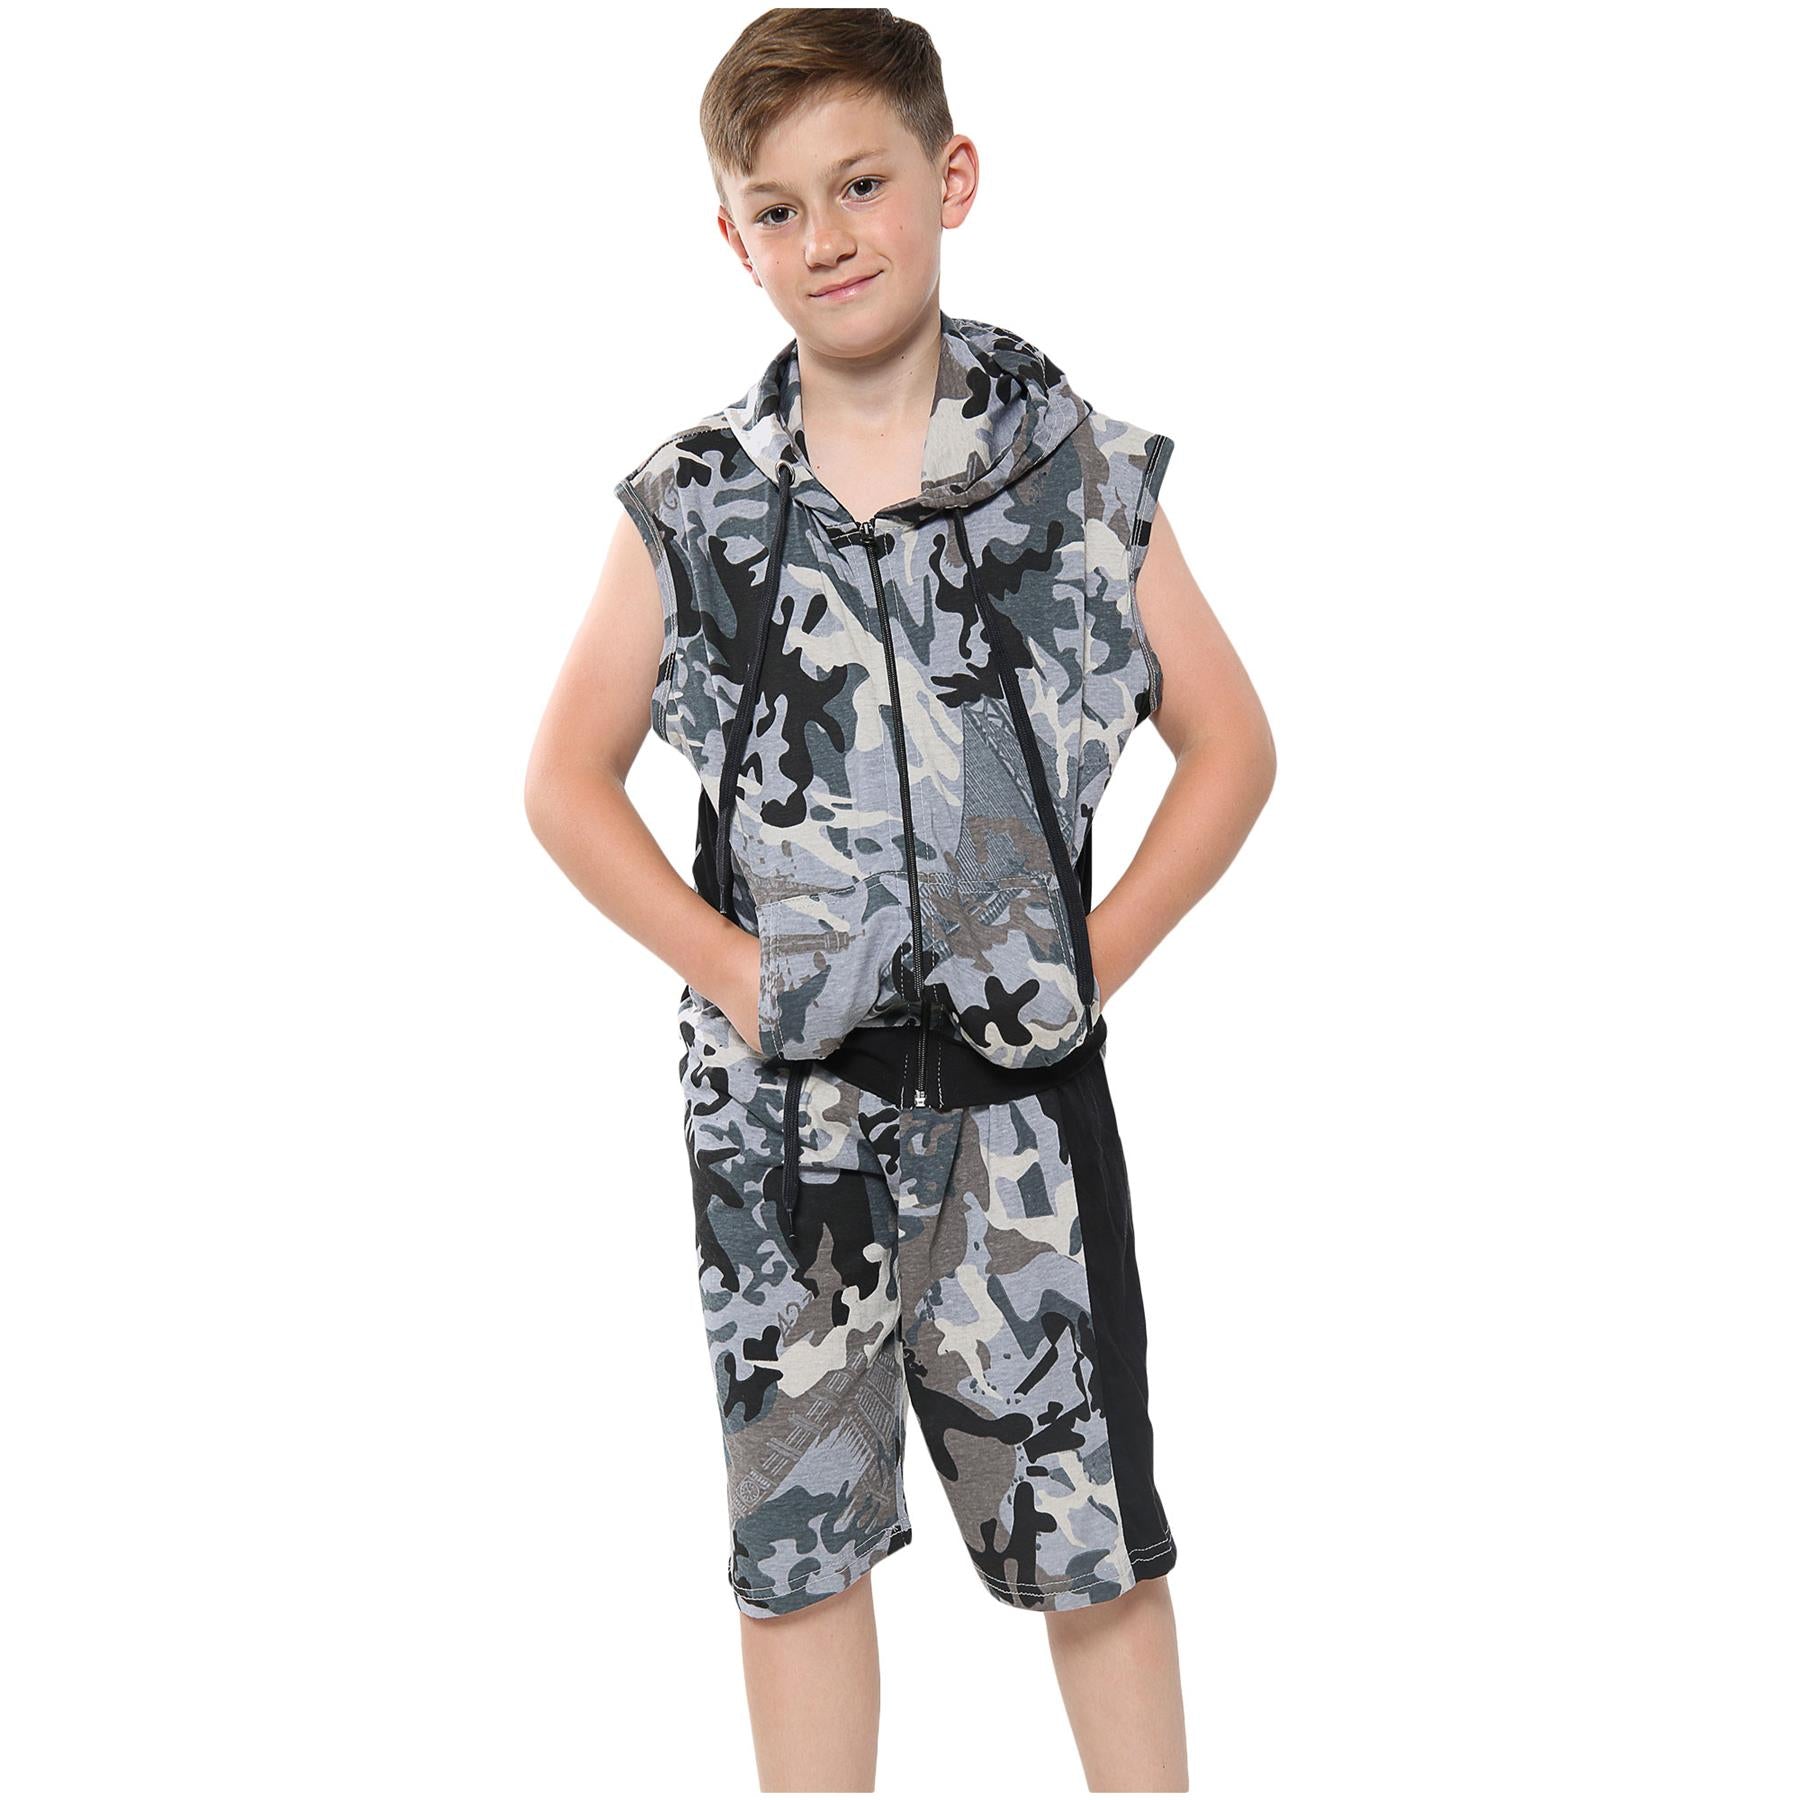 Kids Hooded Zip Top & Shorts Sleeveless Set Summer Wear Girls Boys Age 5-13 Yrs